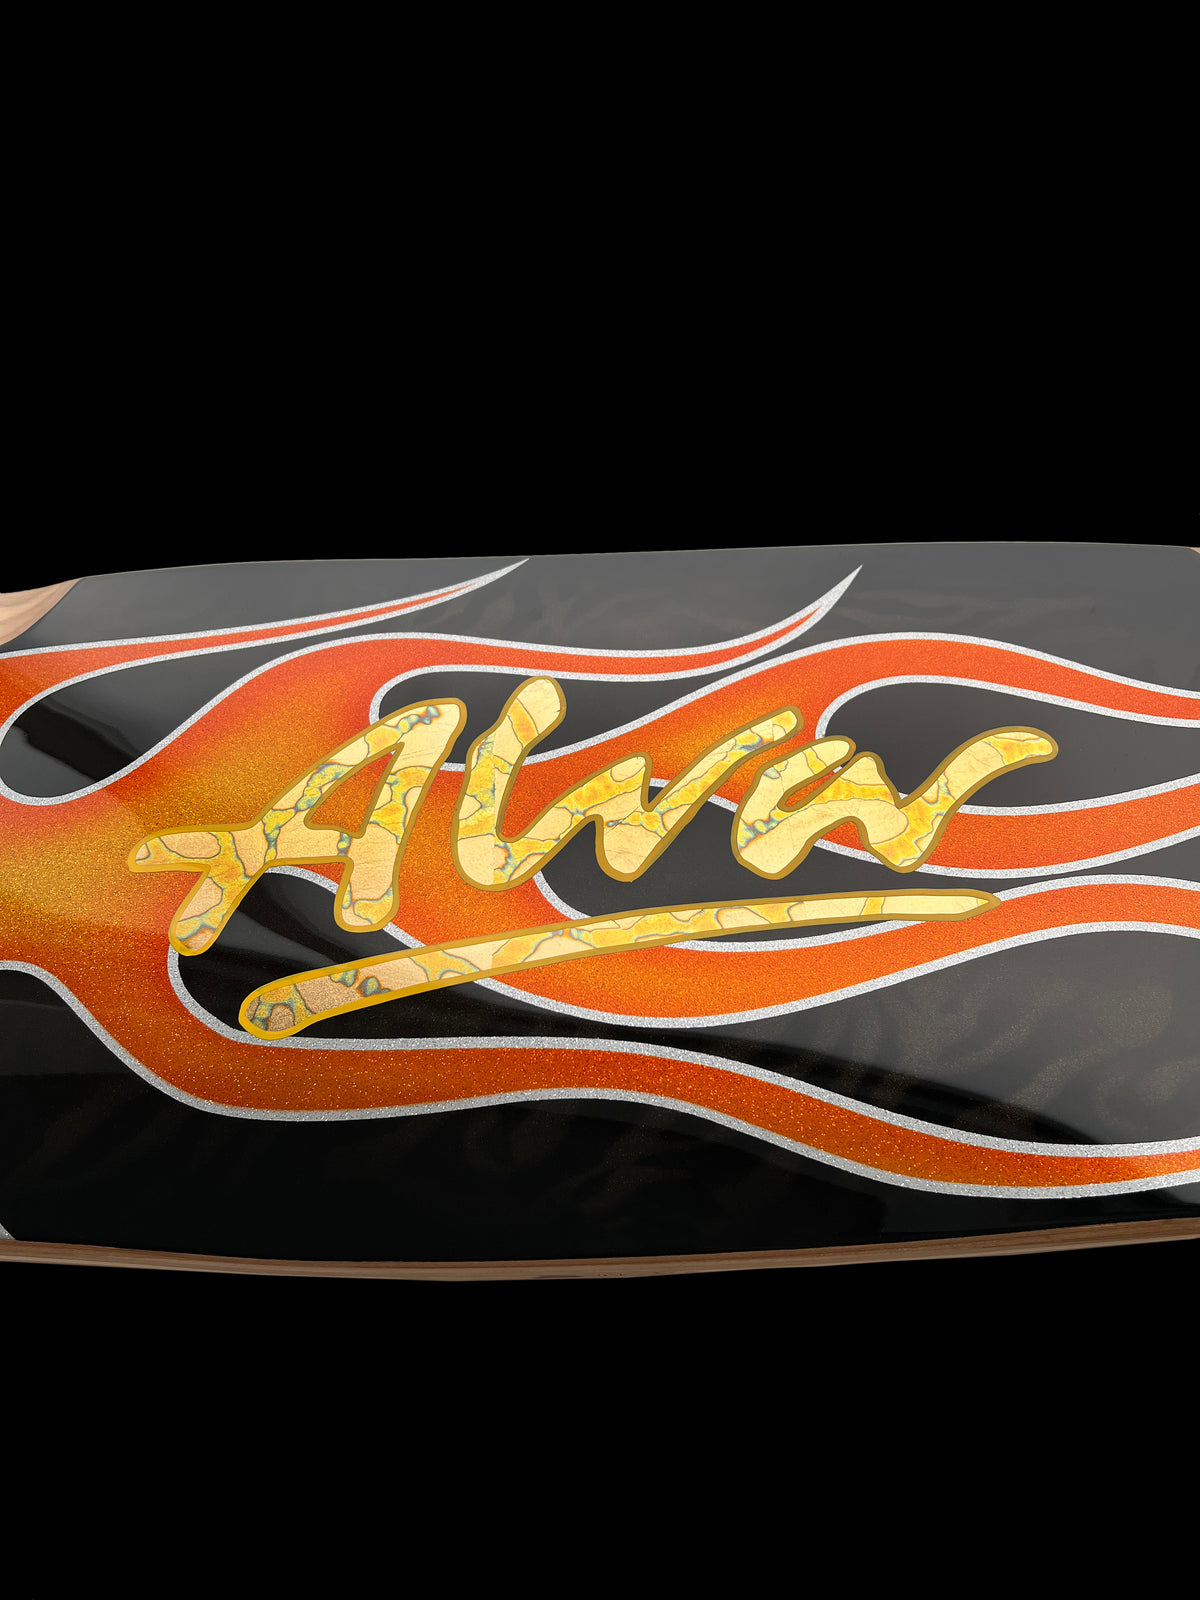 ALVA X MOETALLICA GALLIANO ONE-OF-A-KIND SKATEBOARD #9